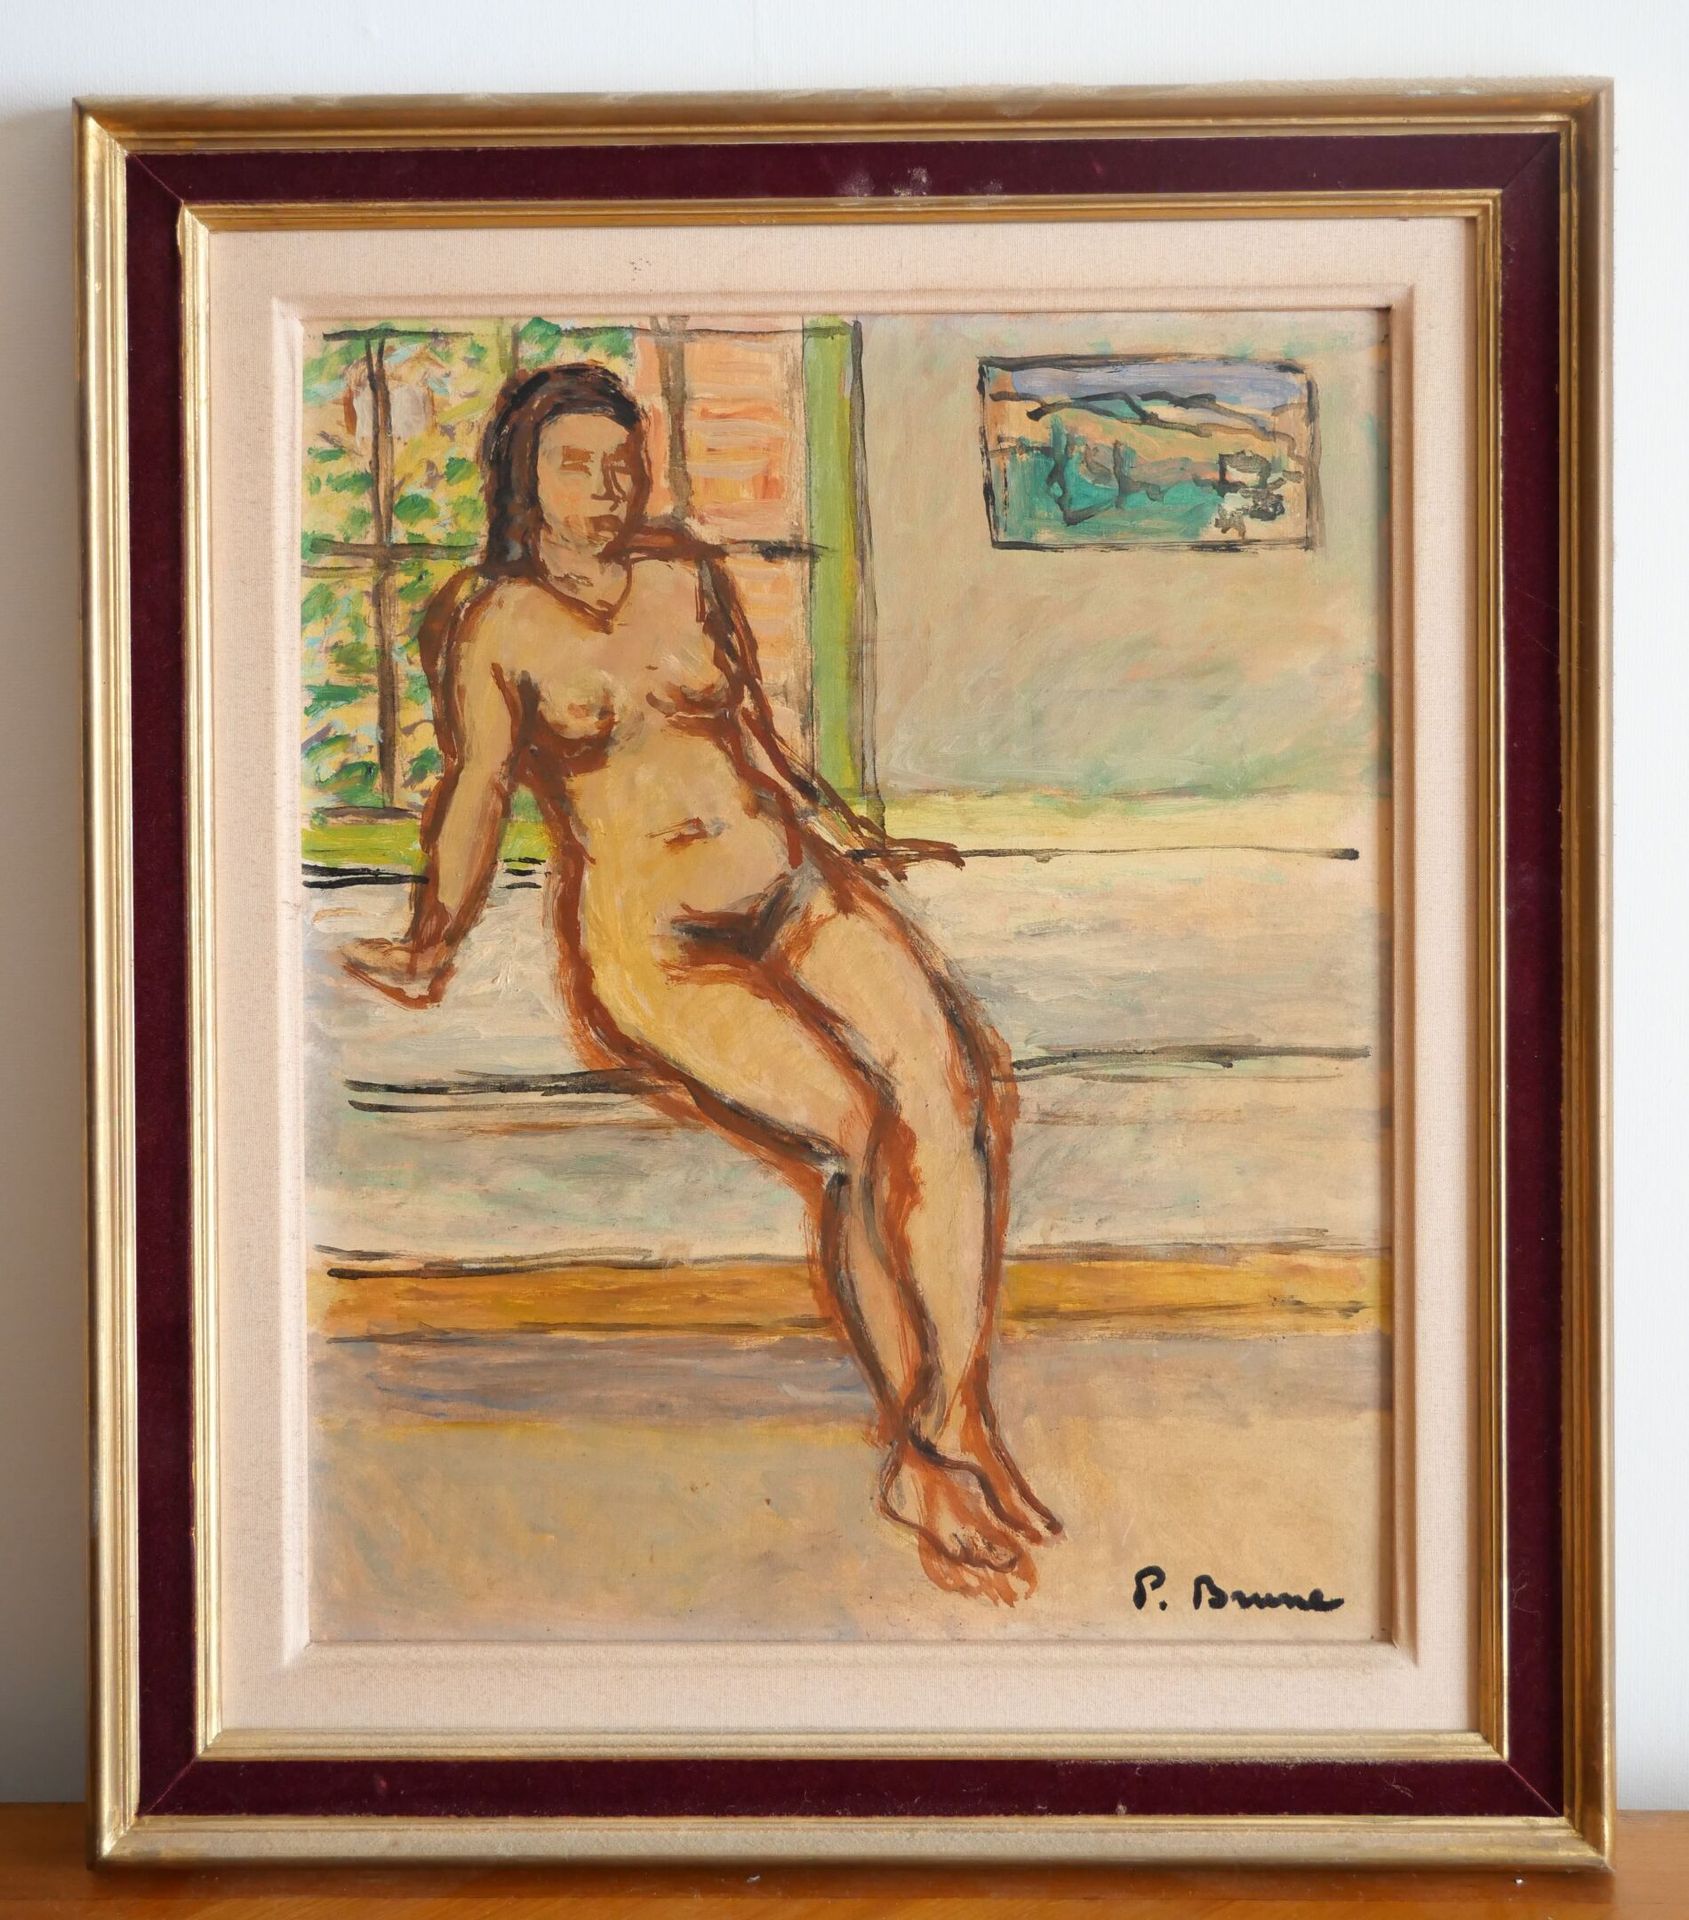 Null 皮埃尔-布鲁内 (1887-1956)
女性裸体 
粘贴在纸板上的纸上油画，右下方有签名
尺寸：40 x 33 cm 
带框架的尺寸：51 x 43厘&hellip;